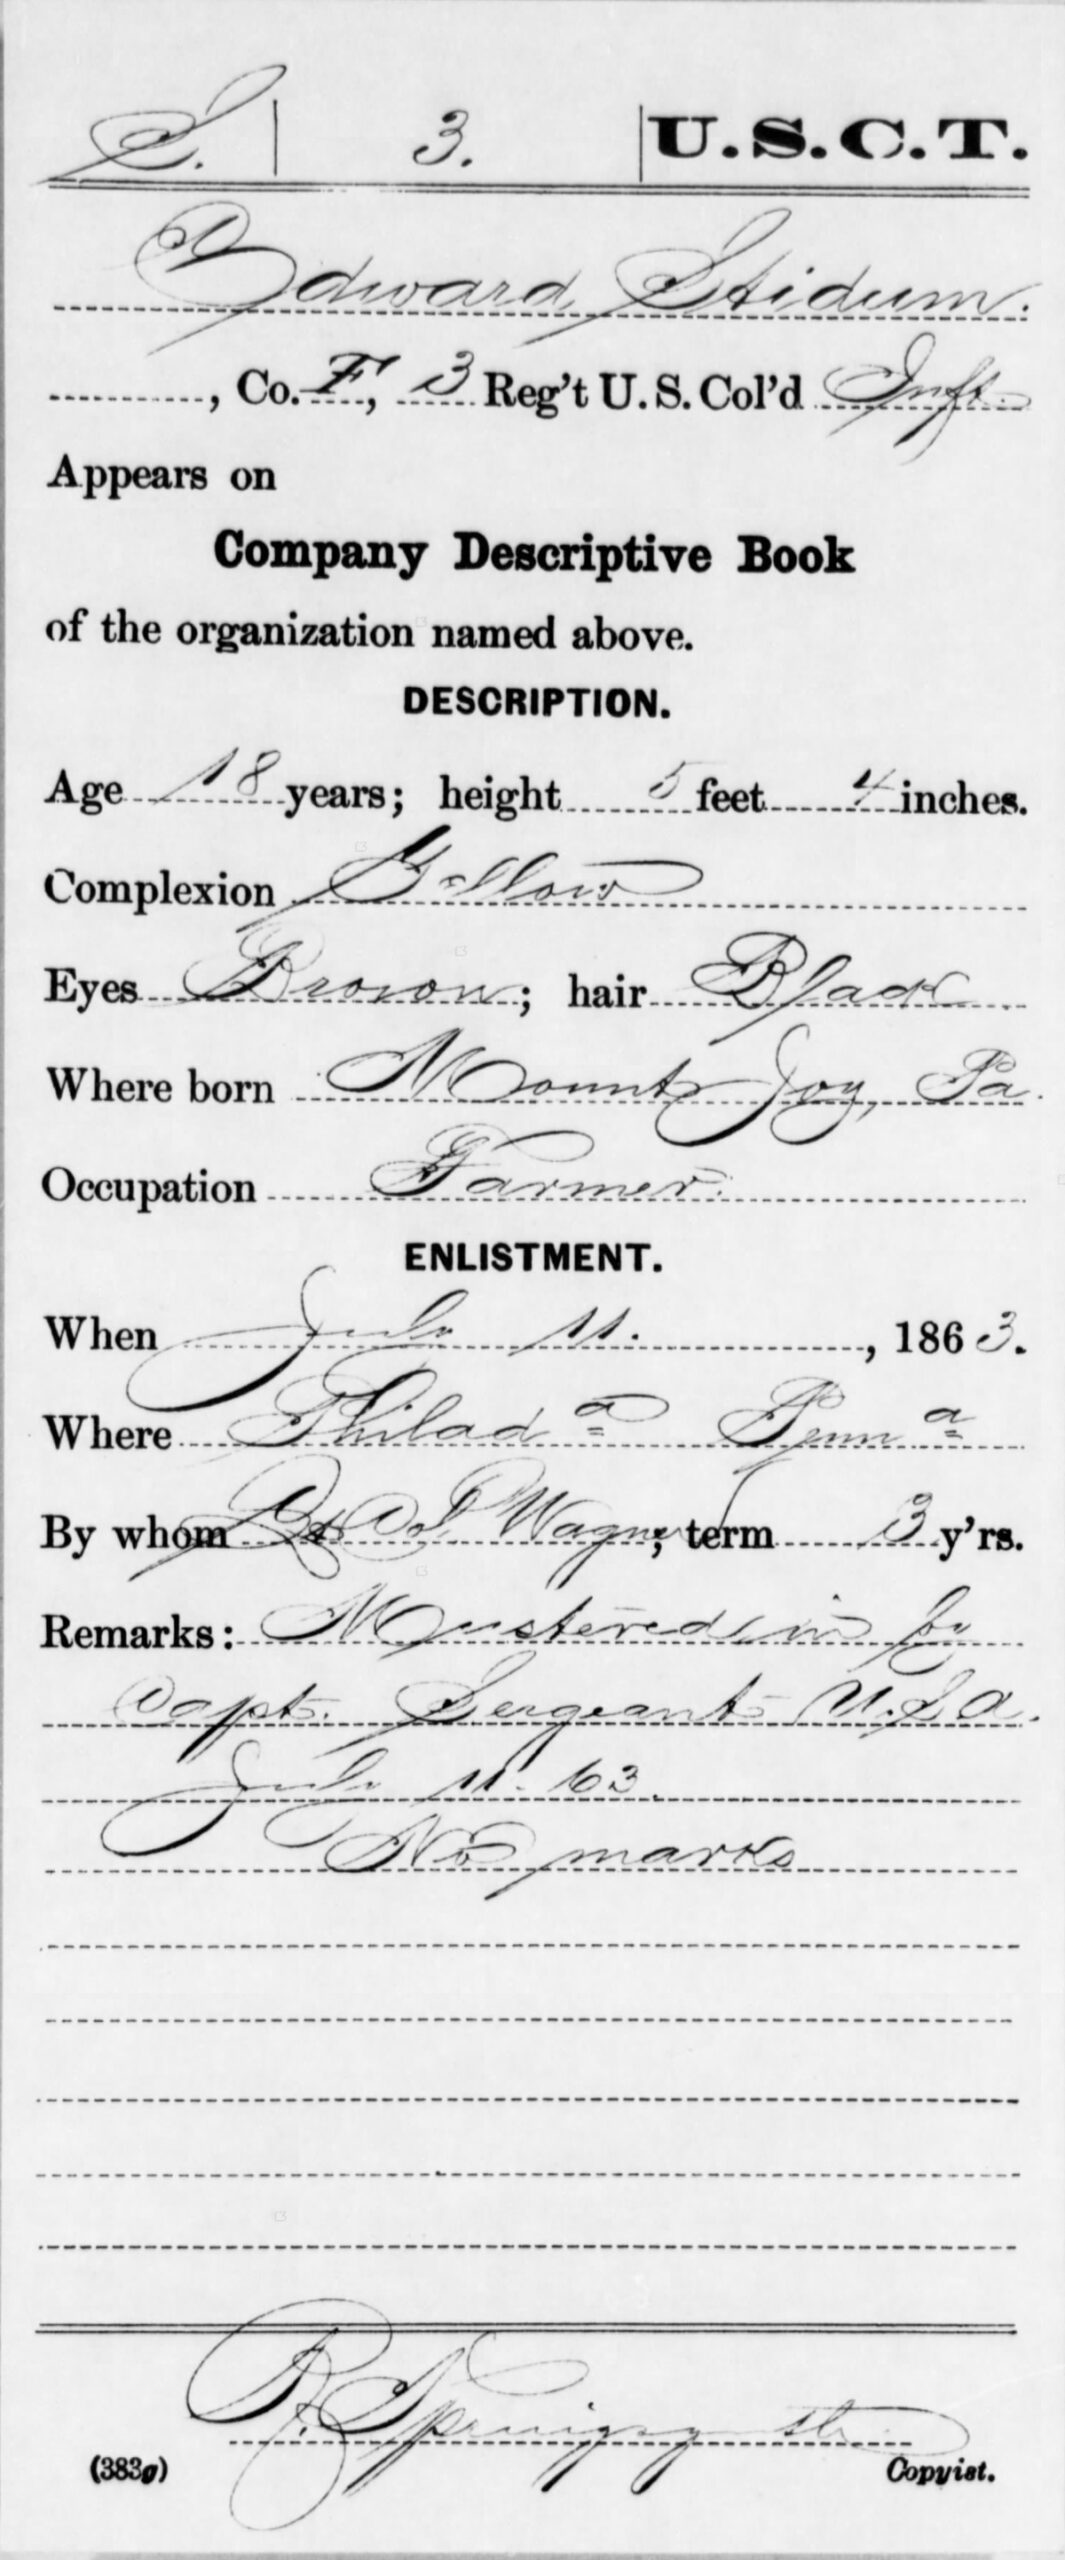 Civil War Service Record for Edward Stidum, Company F, 3rd USCT